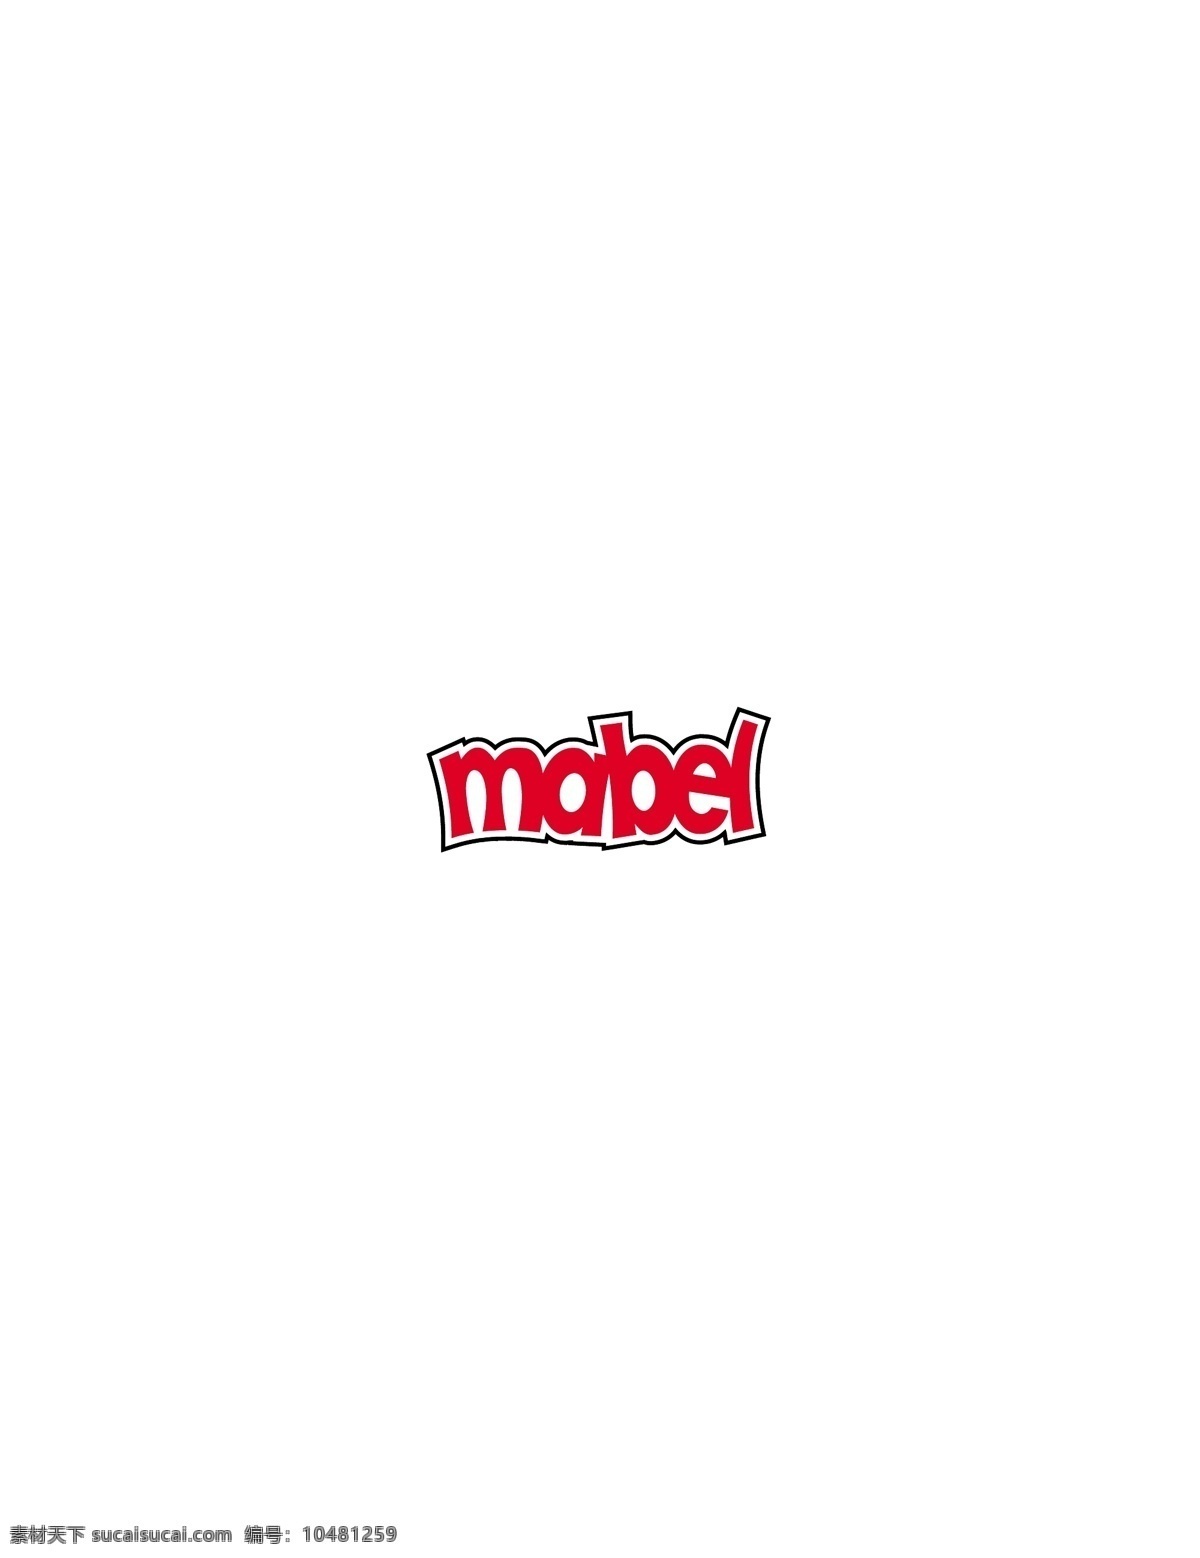 mabel logo大全 logo 设计欣赏 商业矢量 矢量下载 食物 品牌 标志 标志设计 欣赏 网页矢量 矢量图 其他矢量图